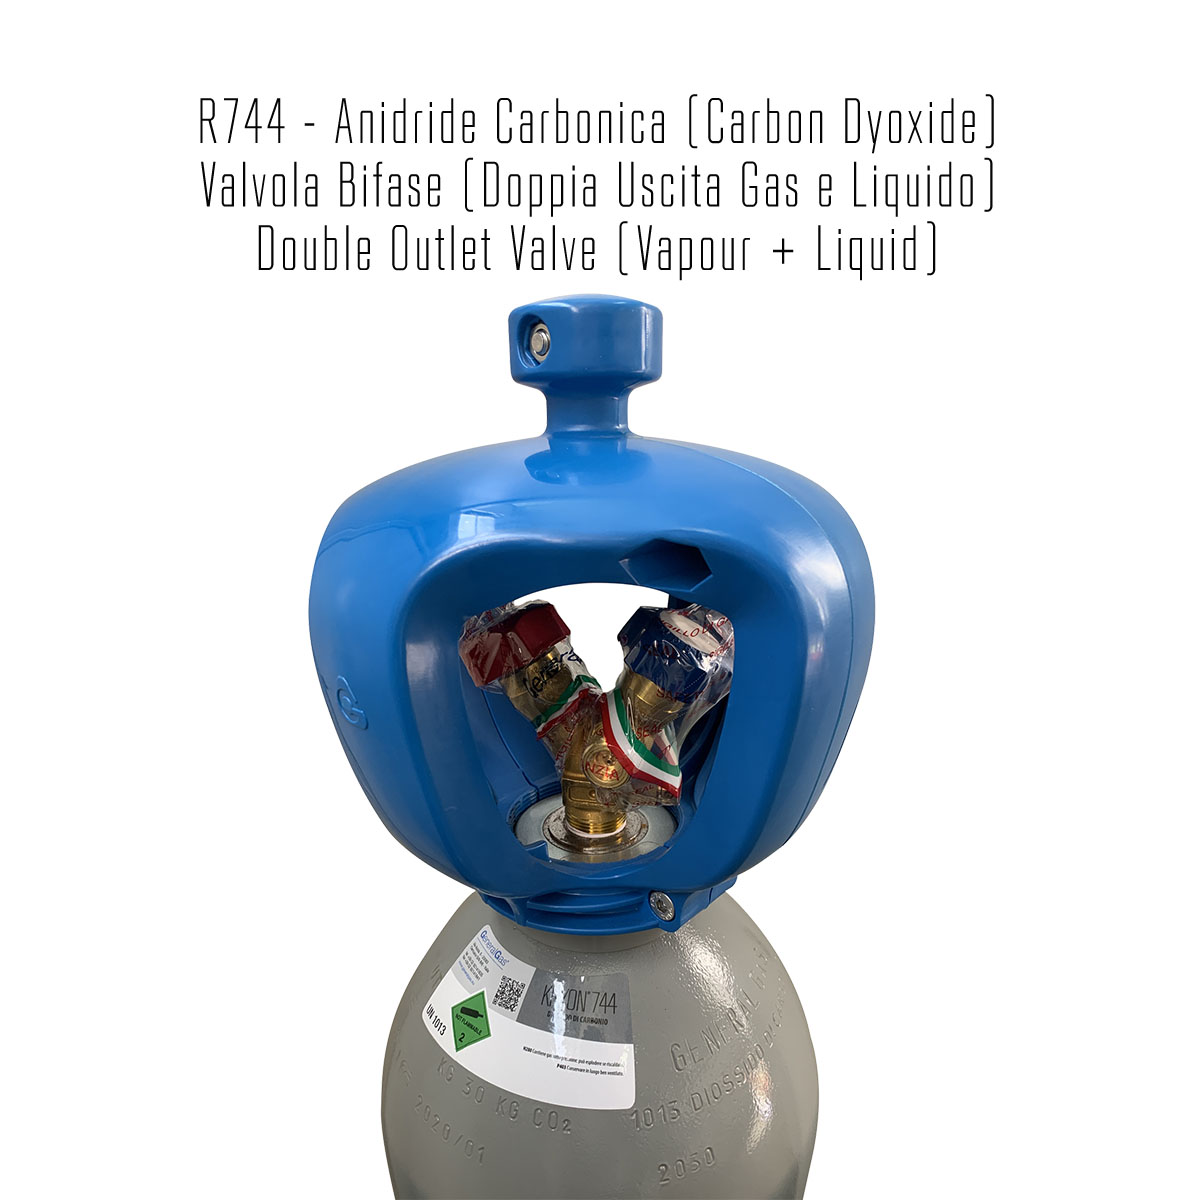 R744 Kryon® 744 - CO2 anidride carbonica refrigerazione in Bombola a Rendere - 40 Lt - 30 Kg - valvola bifase (liquido + gas) - Foto 2